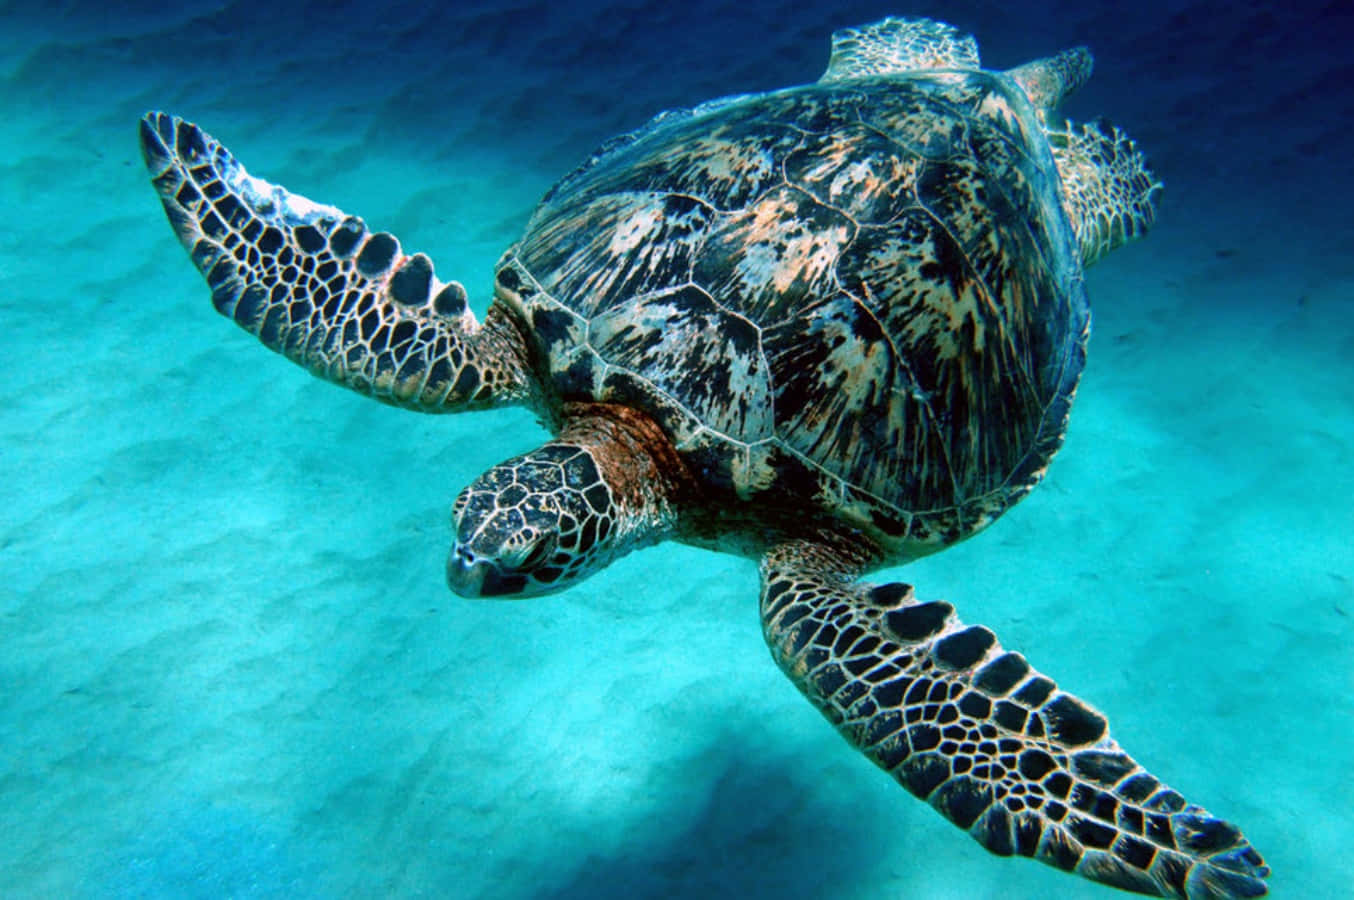 Havskildpaddenyder Dens Oceansk Habitat.